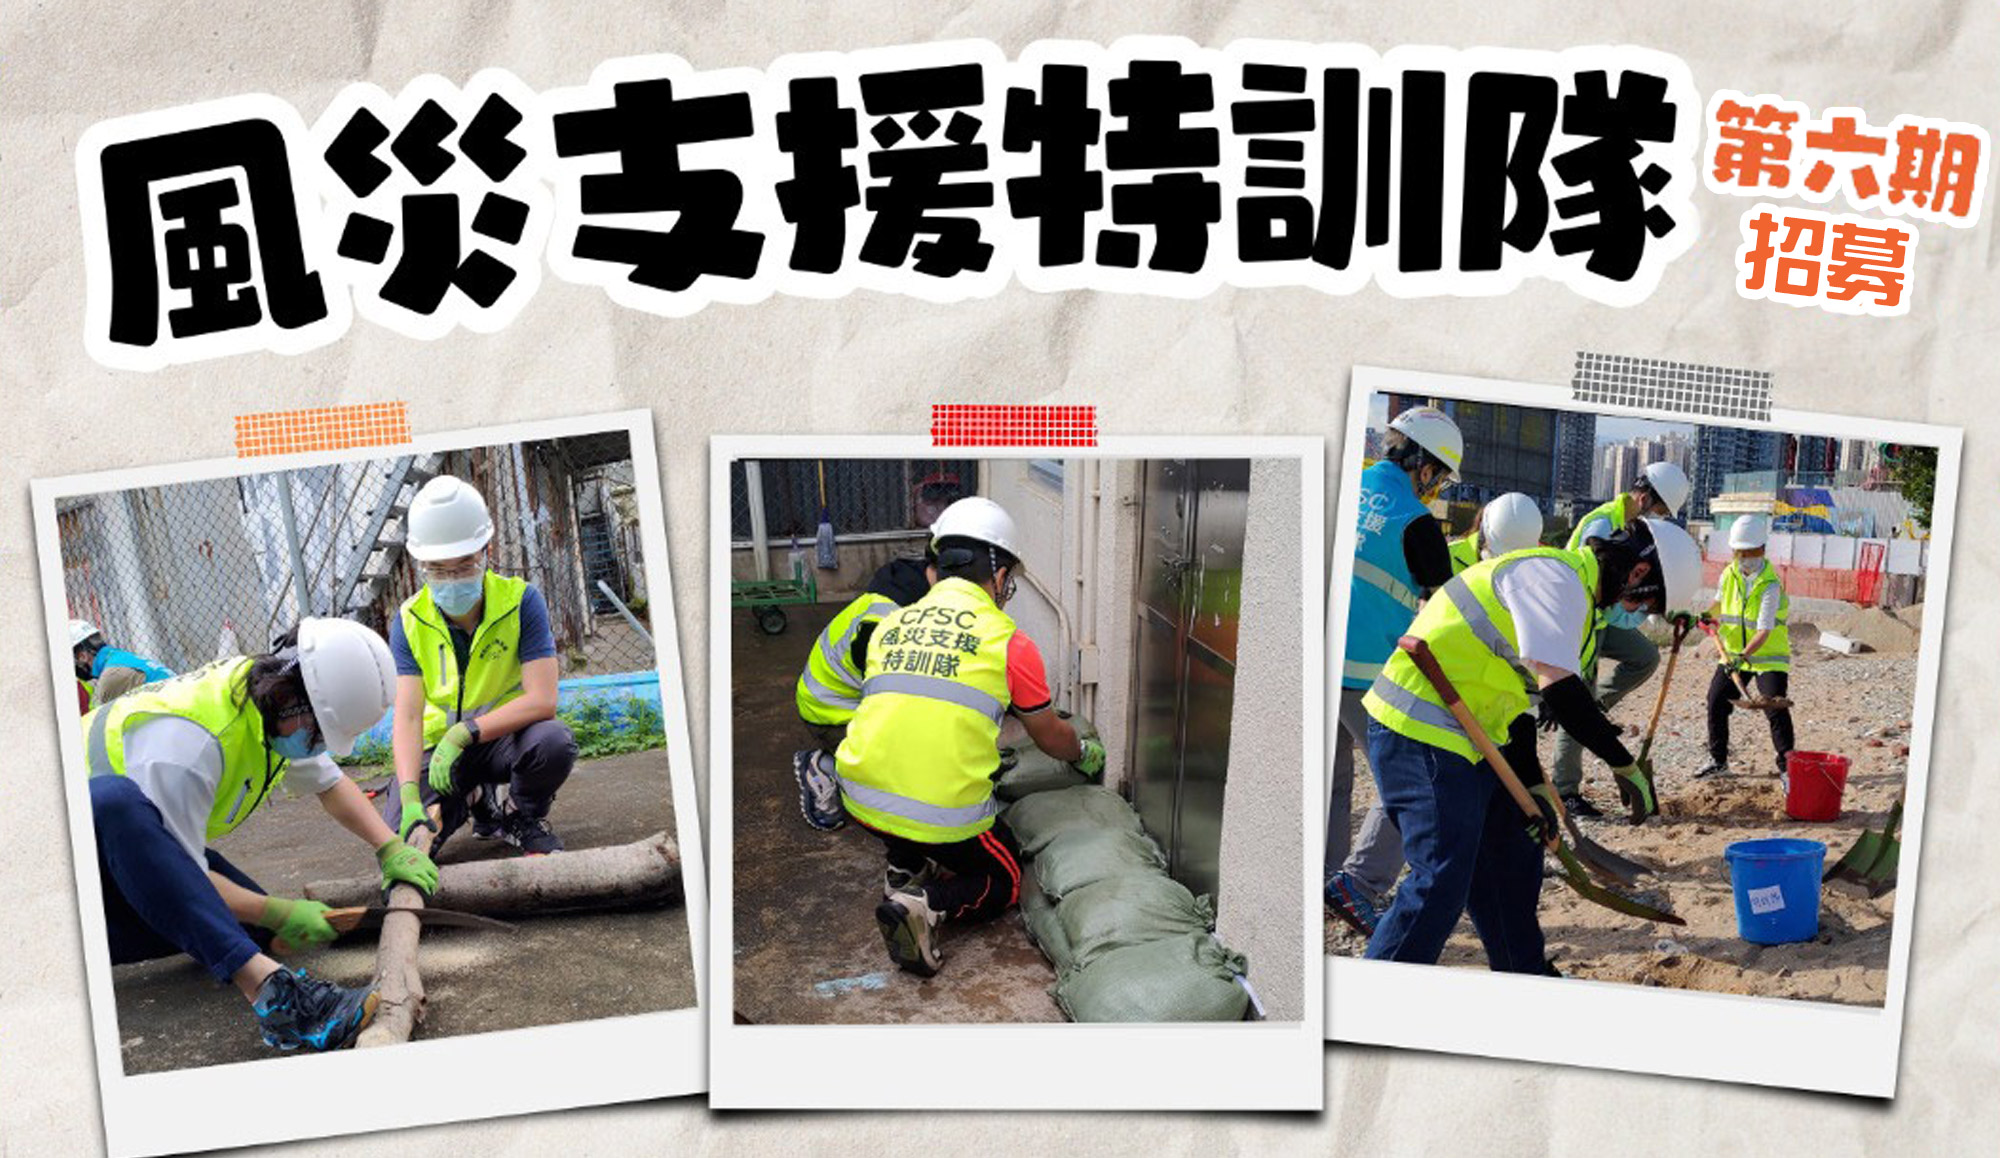 Cover Image - Community Disaster Preparedness Programme Recruitment- Lei Yue Mun Neighbourhood Level Community Development Project